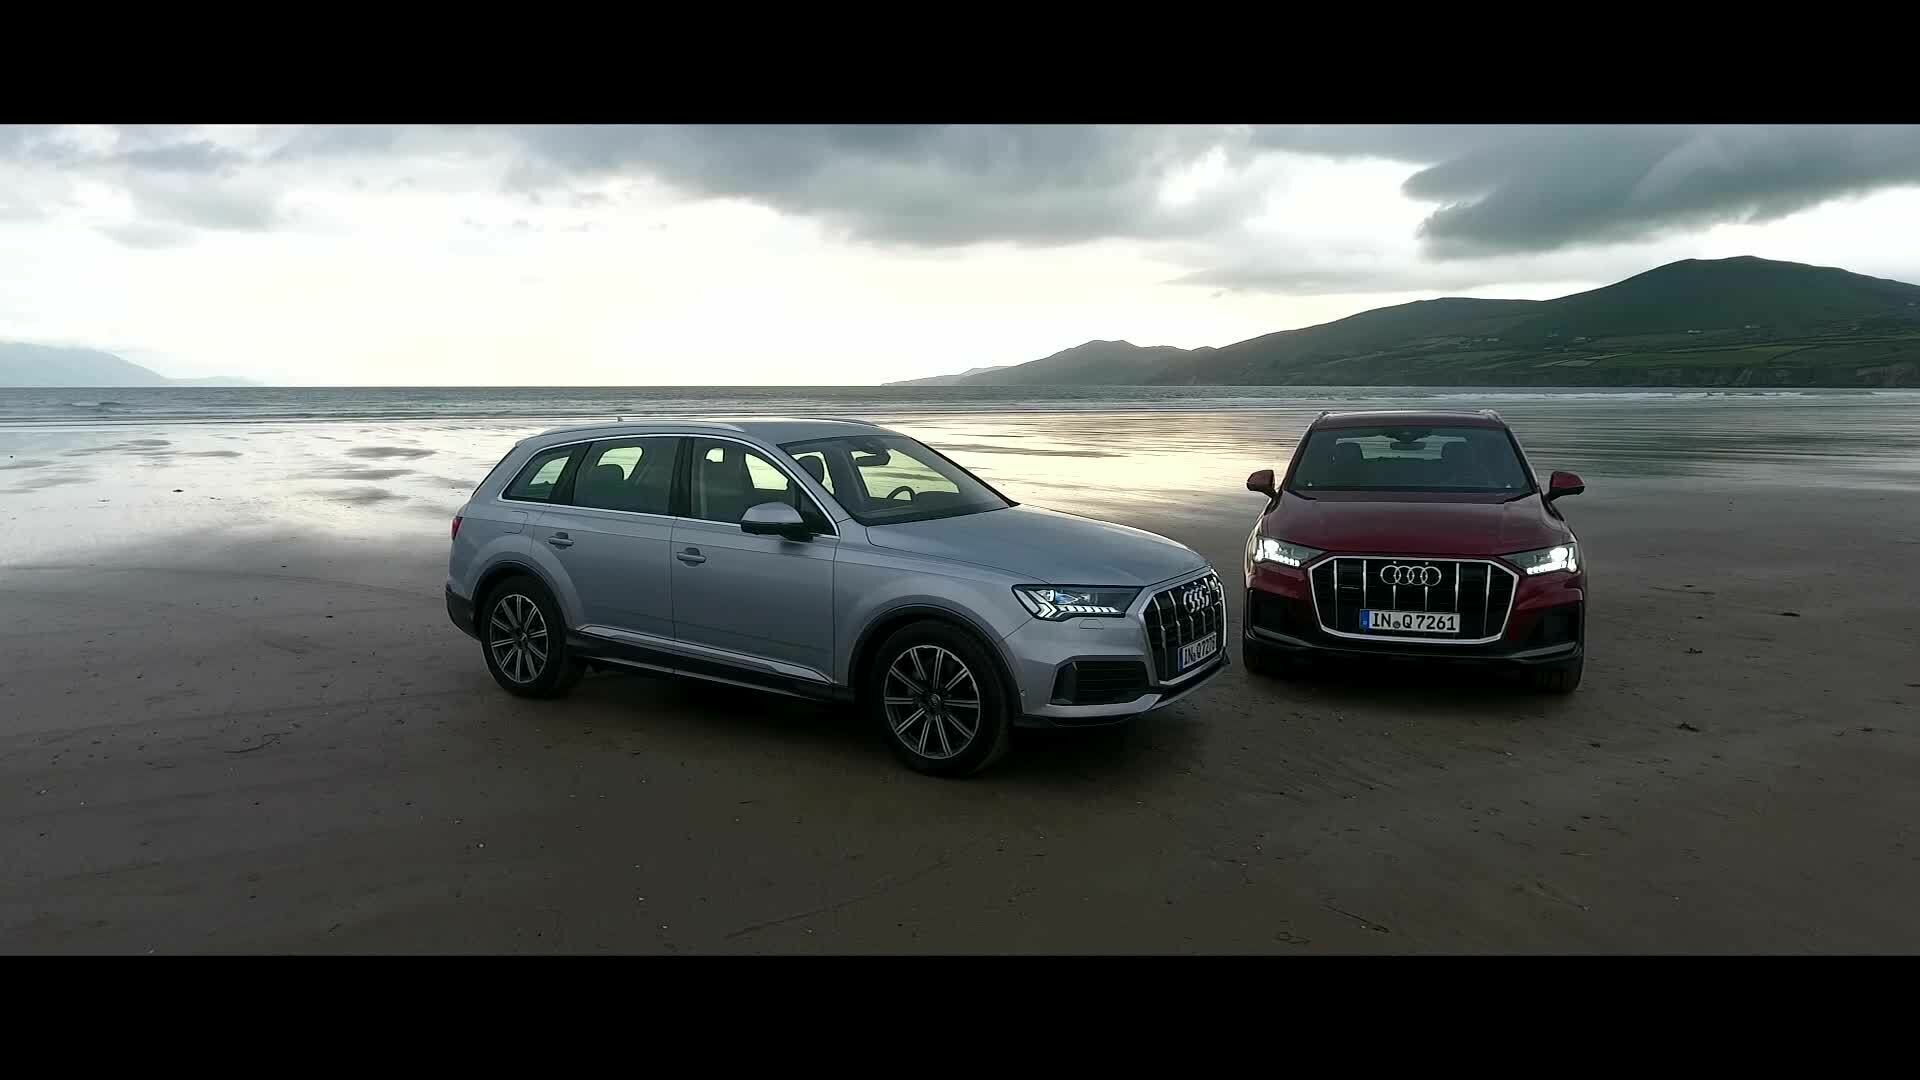 Audi Q7 on Location (Trailer)